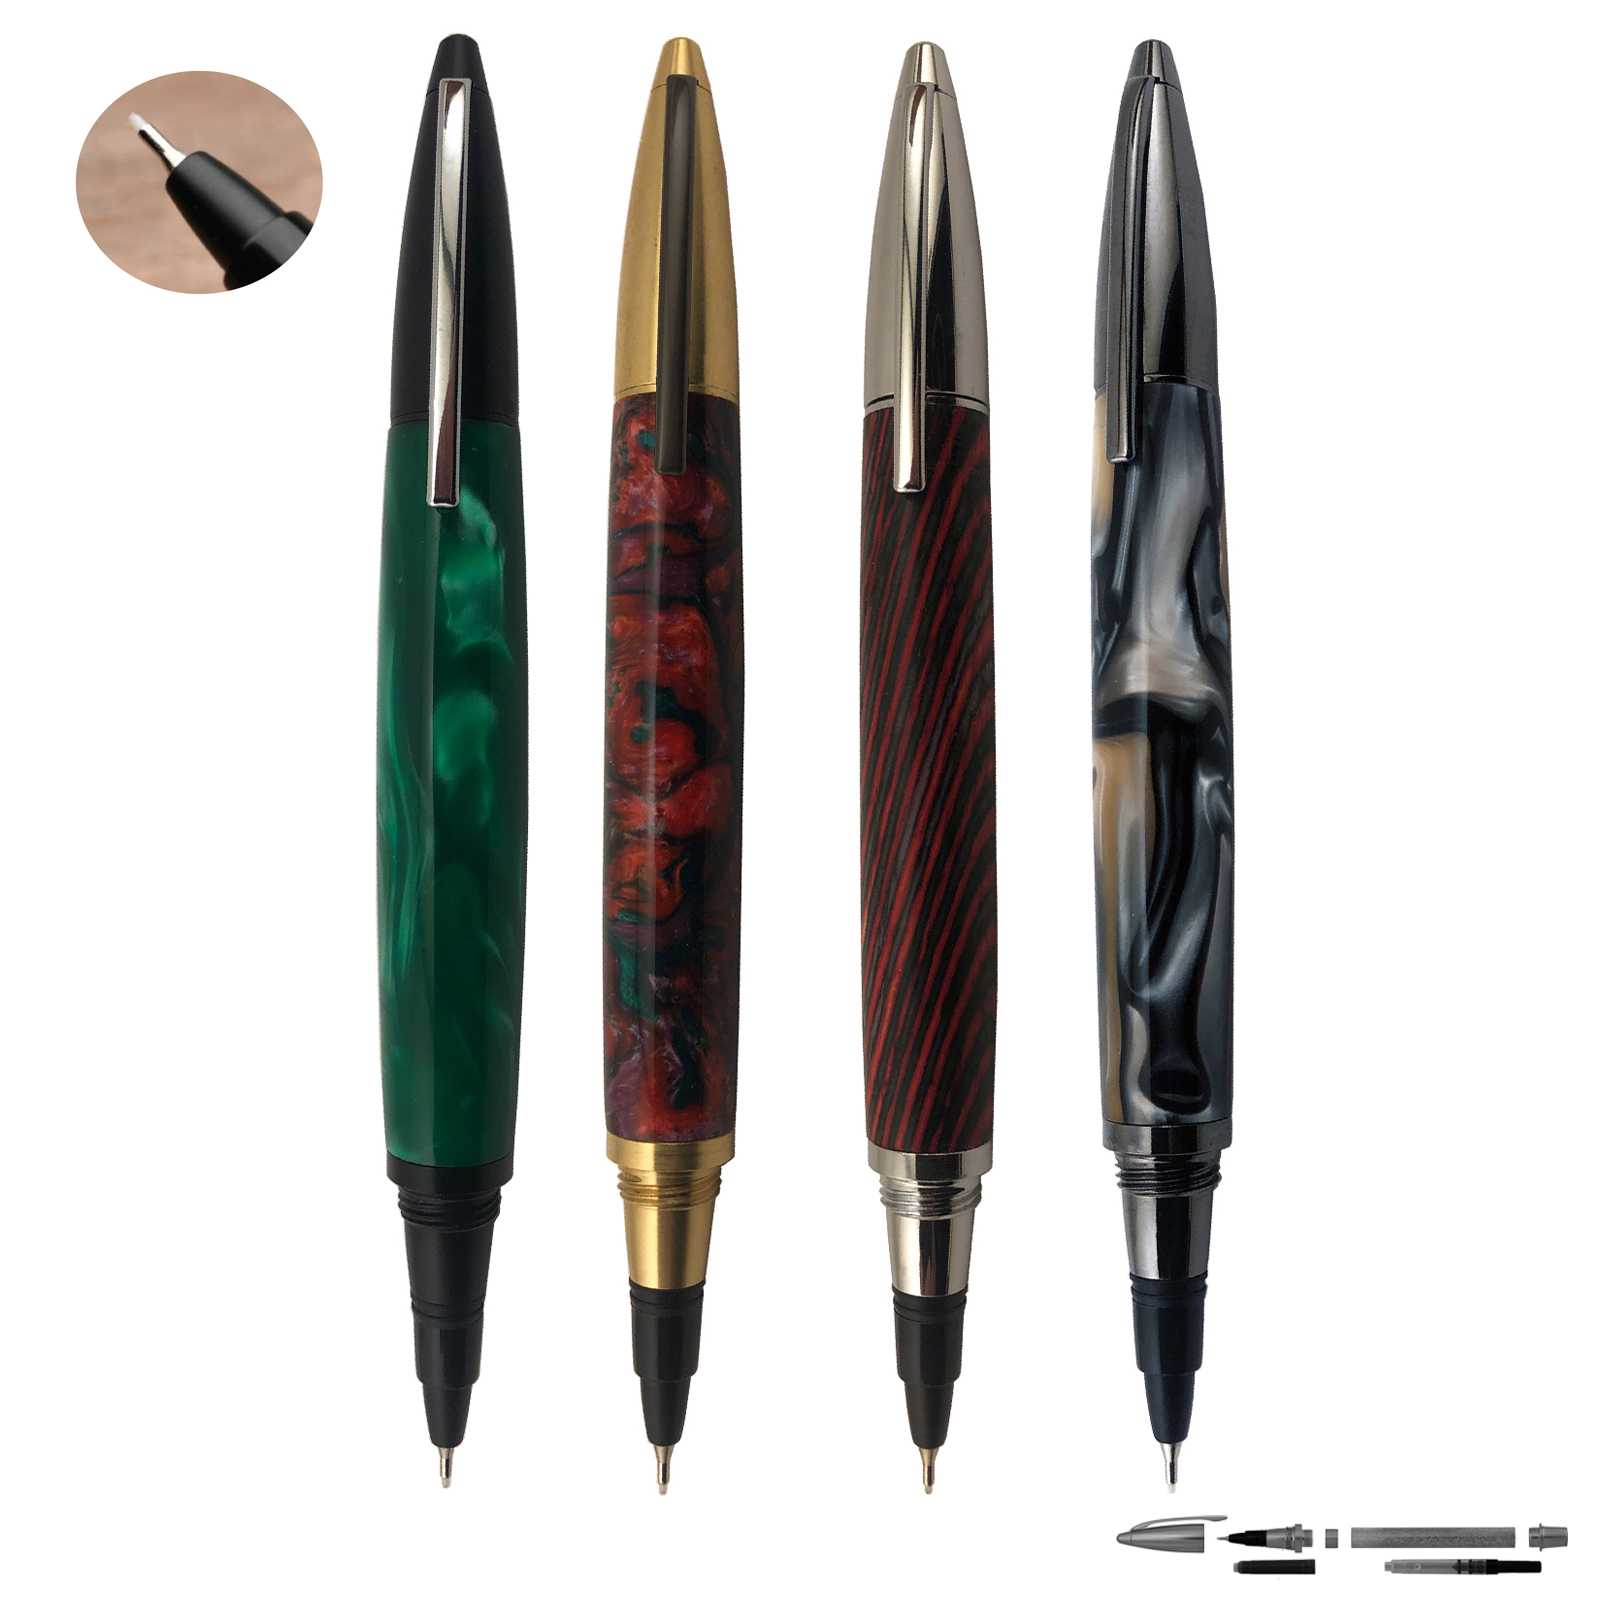 Pen+Gear Felt-Tip Pens, Ultra Fine, Assorted Colors, 24 Count